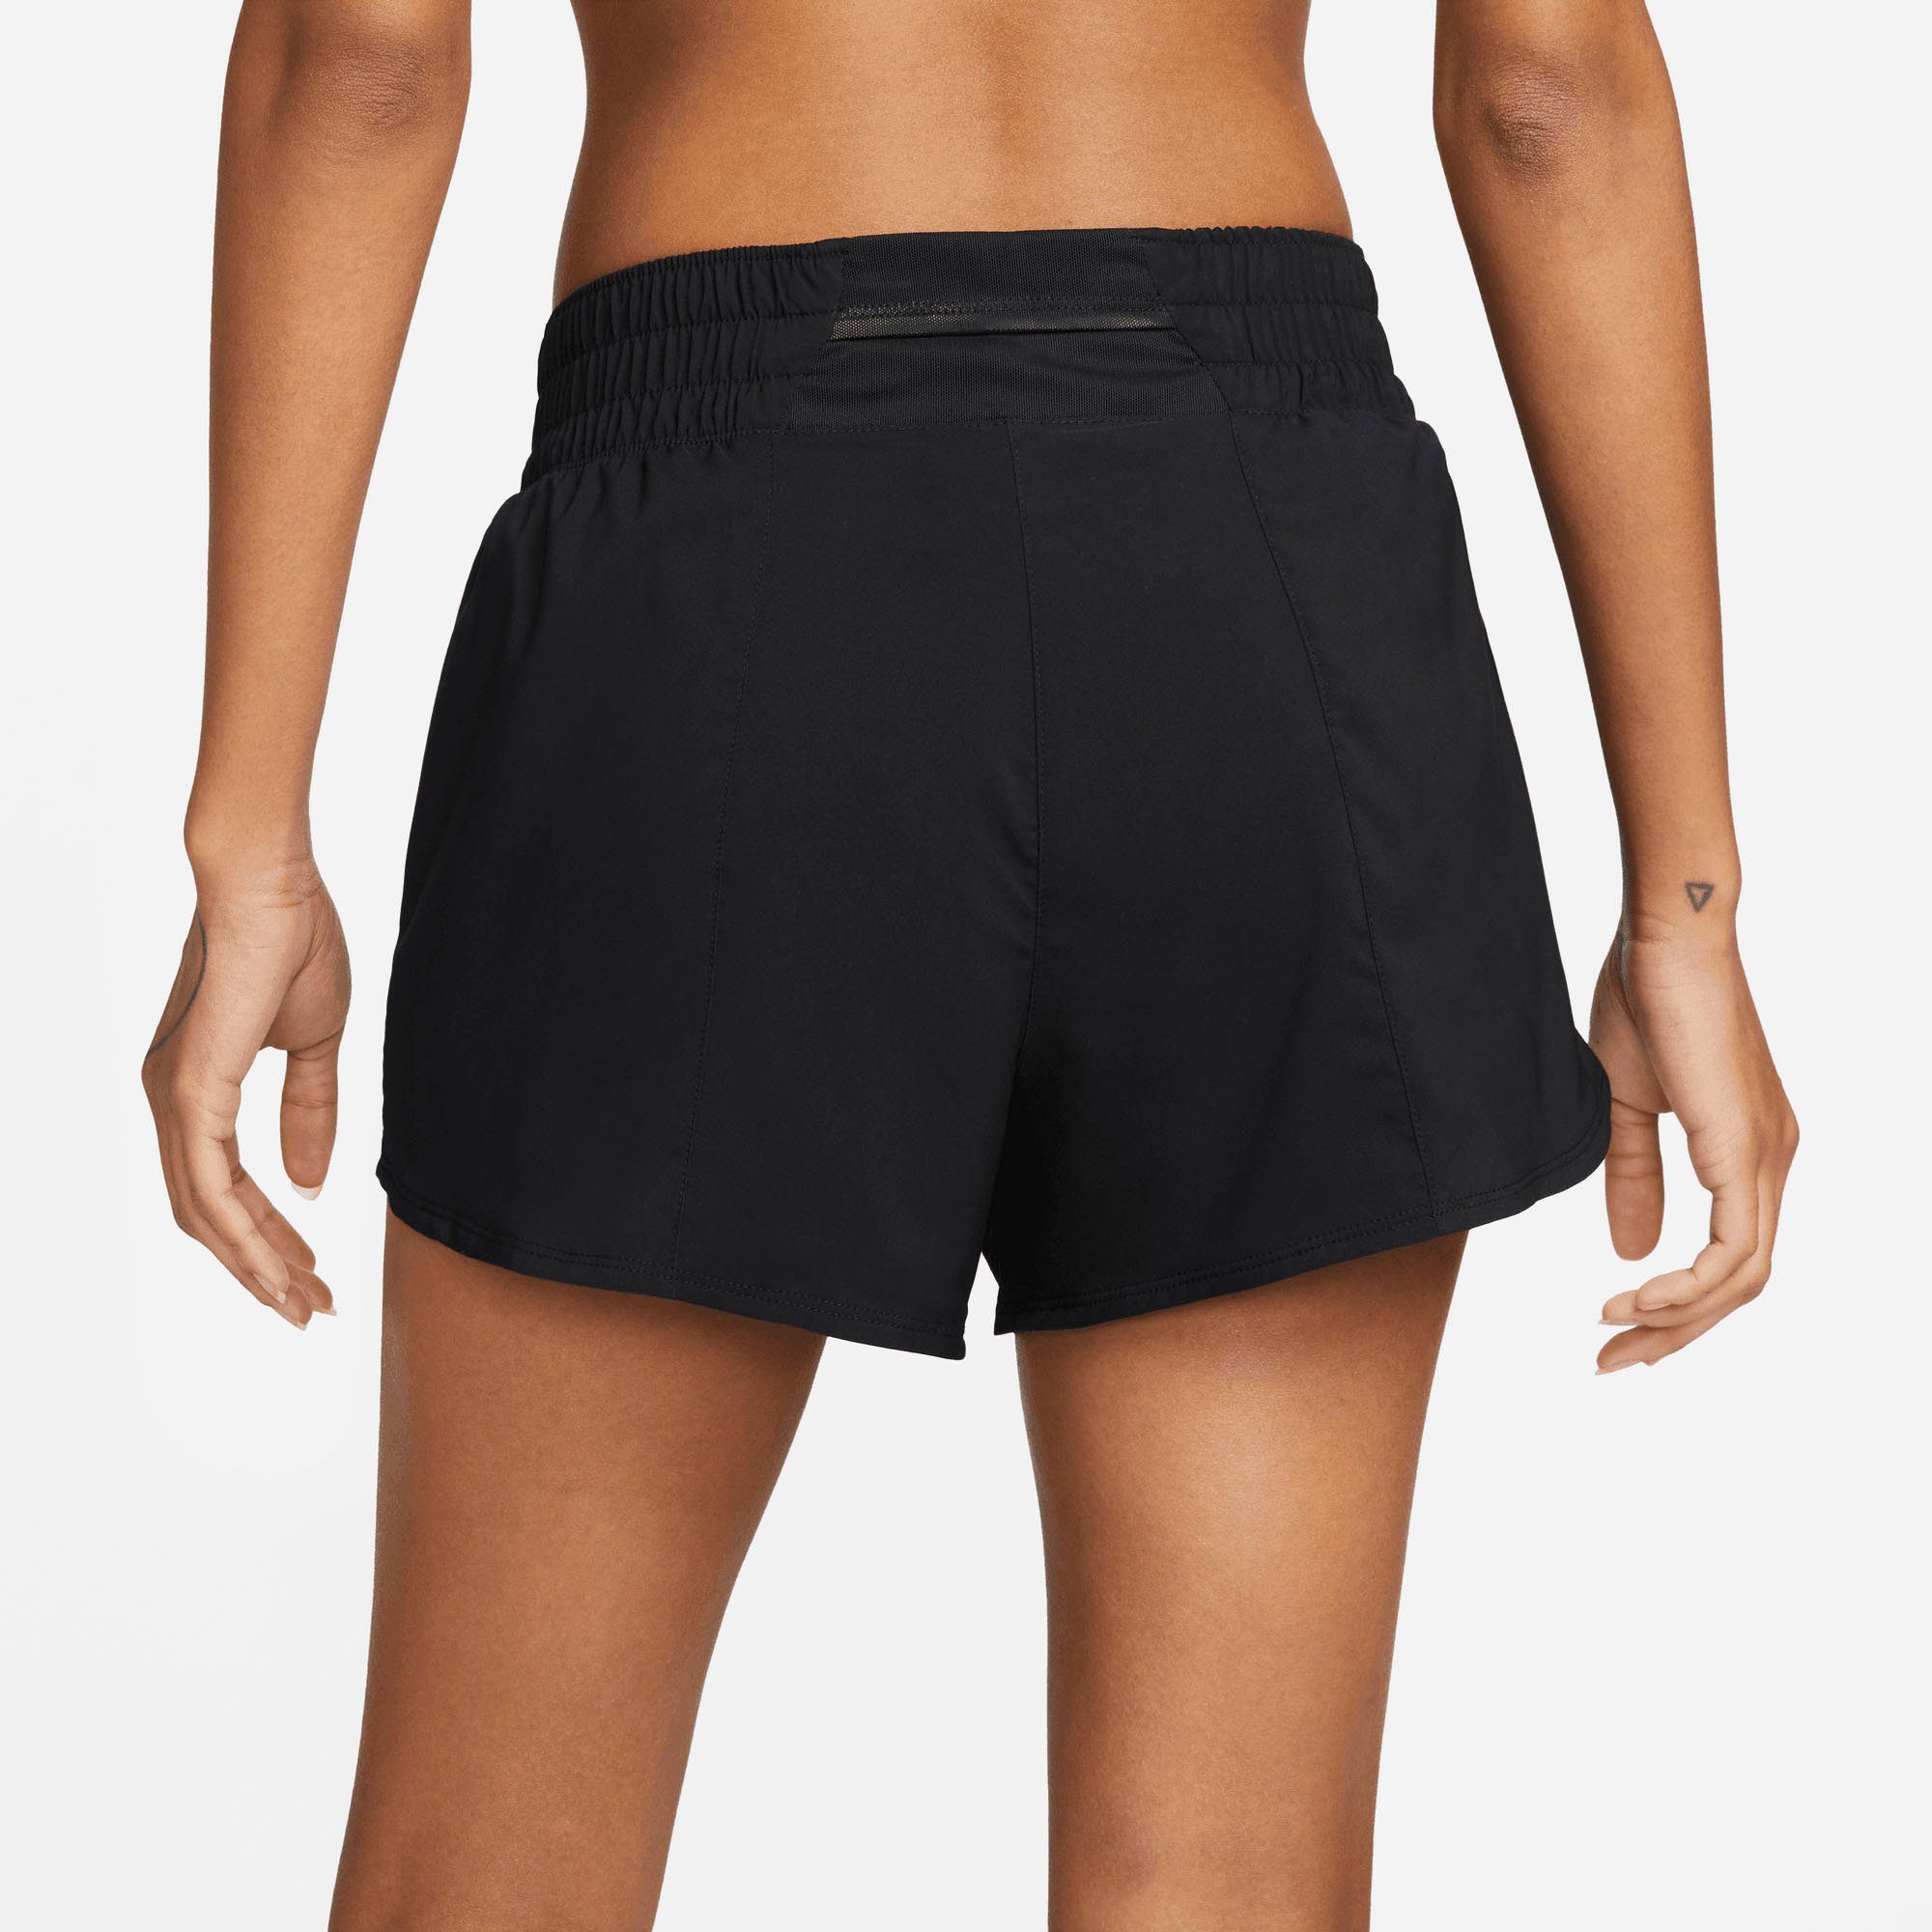 Laufshorts BLACK Swoosh Women's Nike Shorts